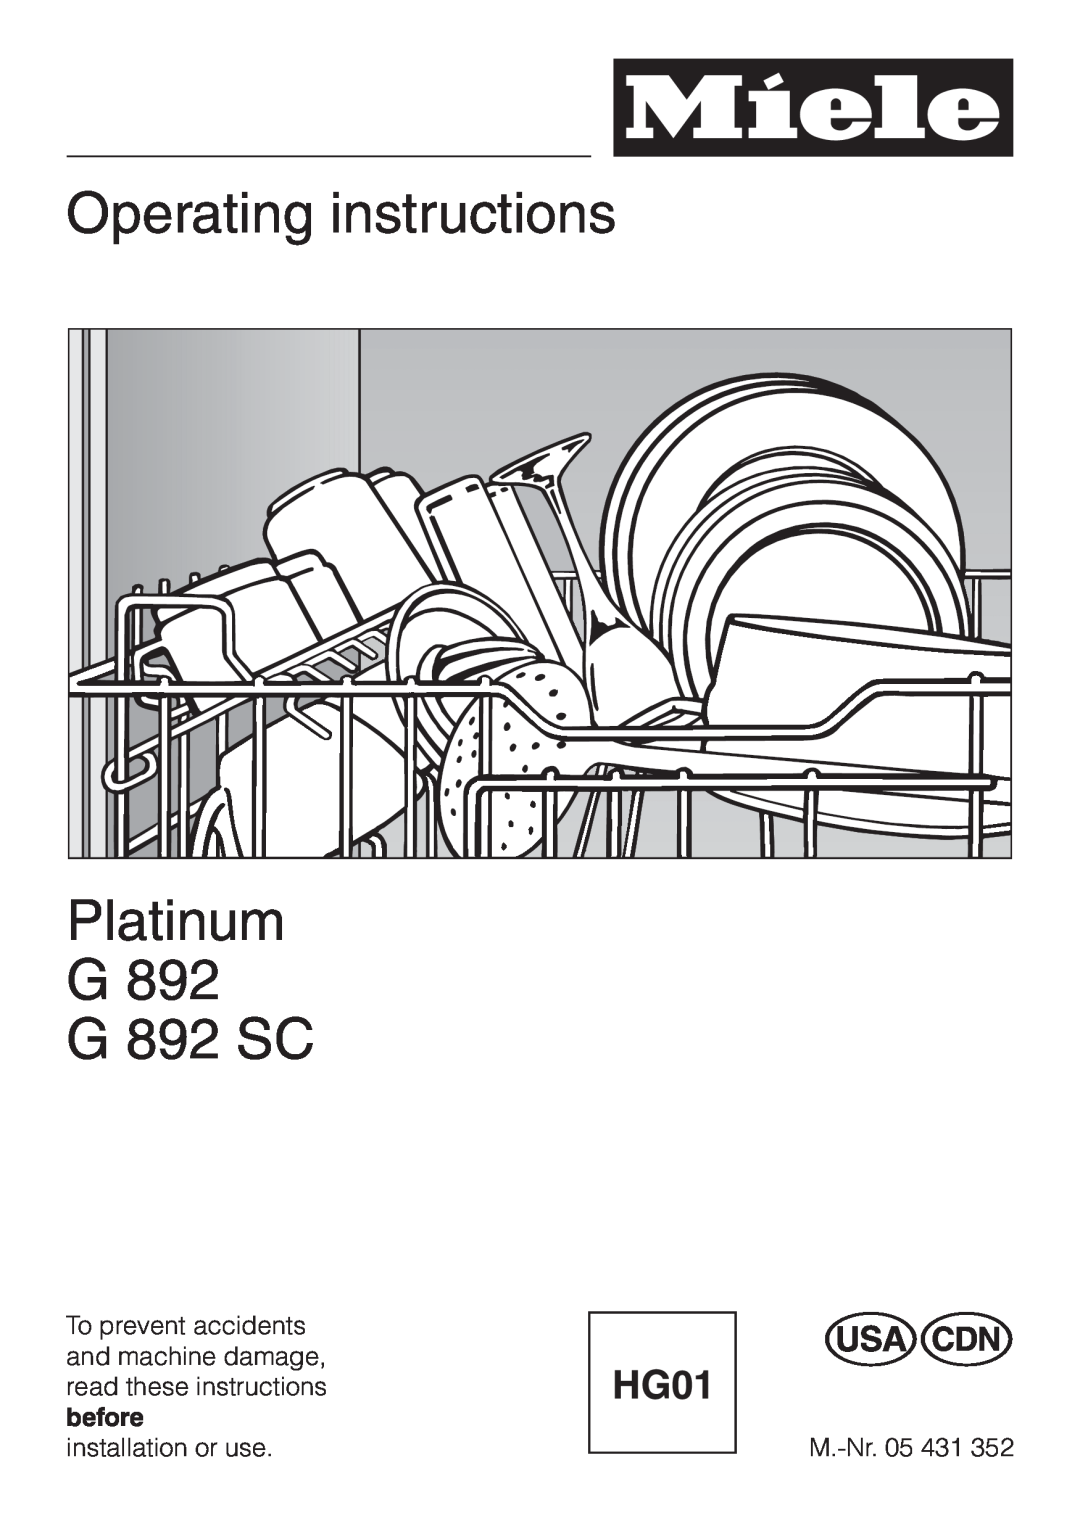 Miele G 892 SC, G892us manual Operating instructions, Platinum 